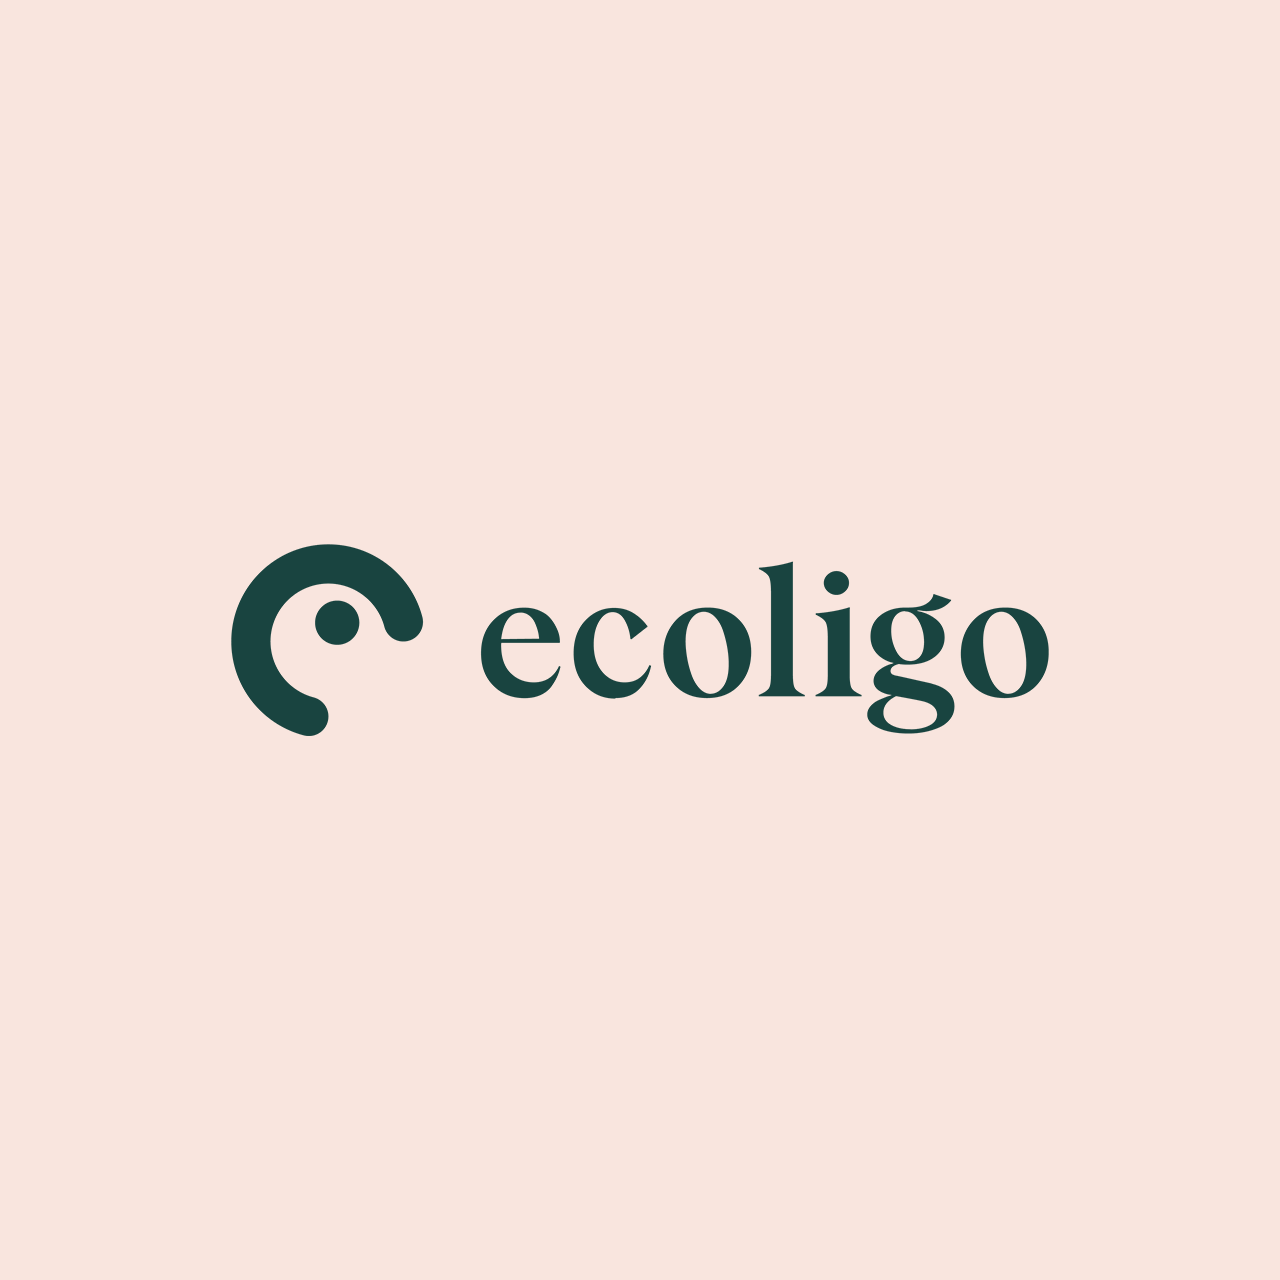 Ecoligo logo